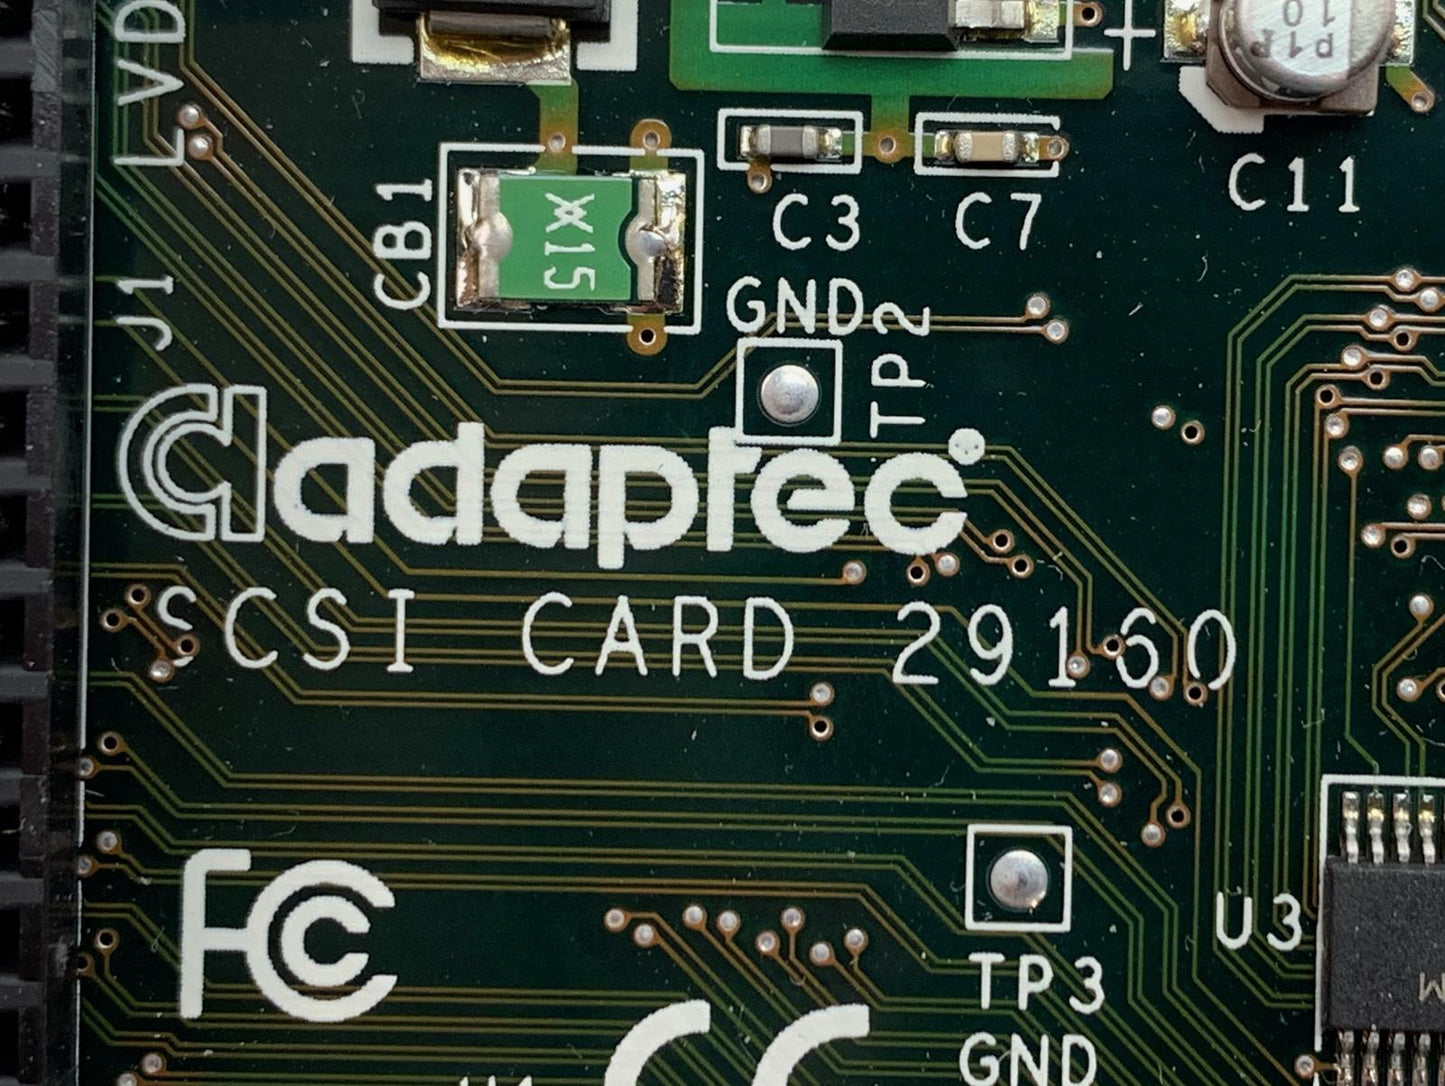 Adaptec 29160 SCSI PCI LVD/SE 64 Bit Ultra160 RAID Controller Card